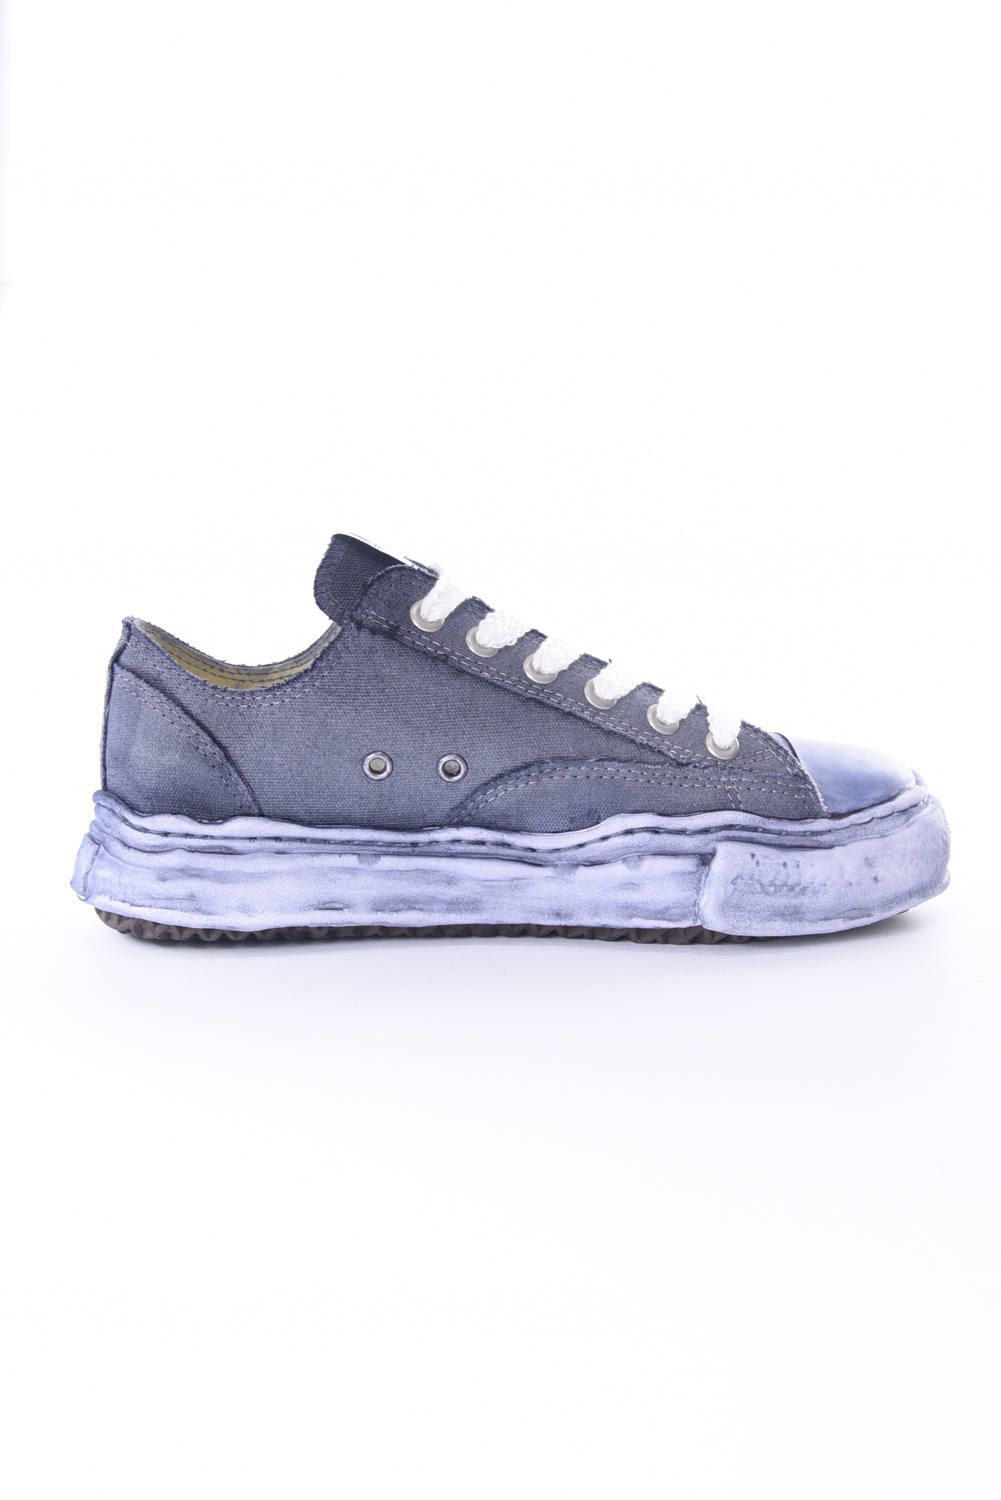 Maison MIHARA YASUHIRO - original sole Over Dyed lowcut sneaker 